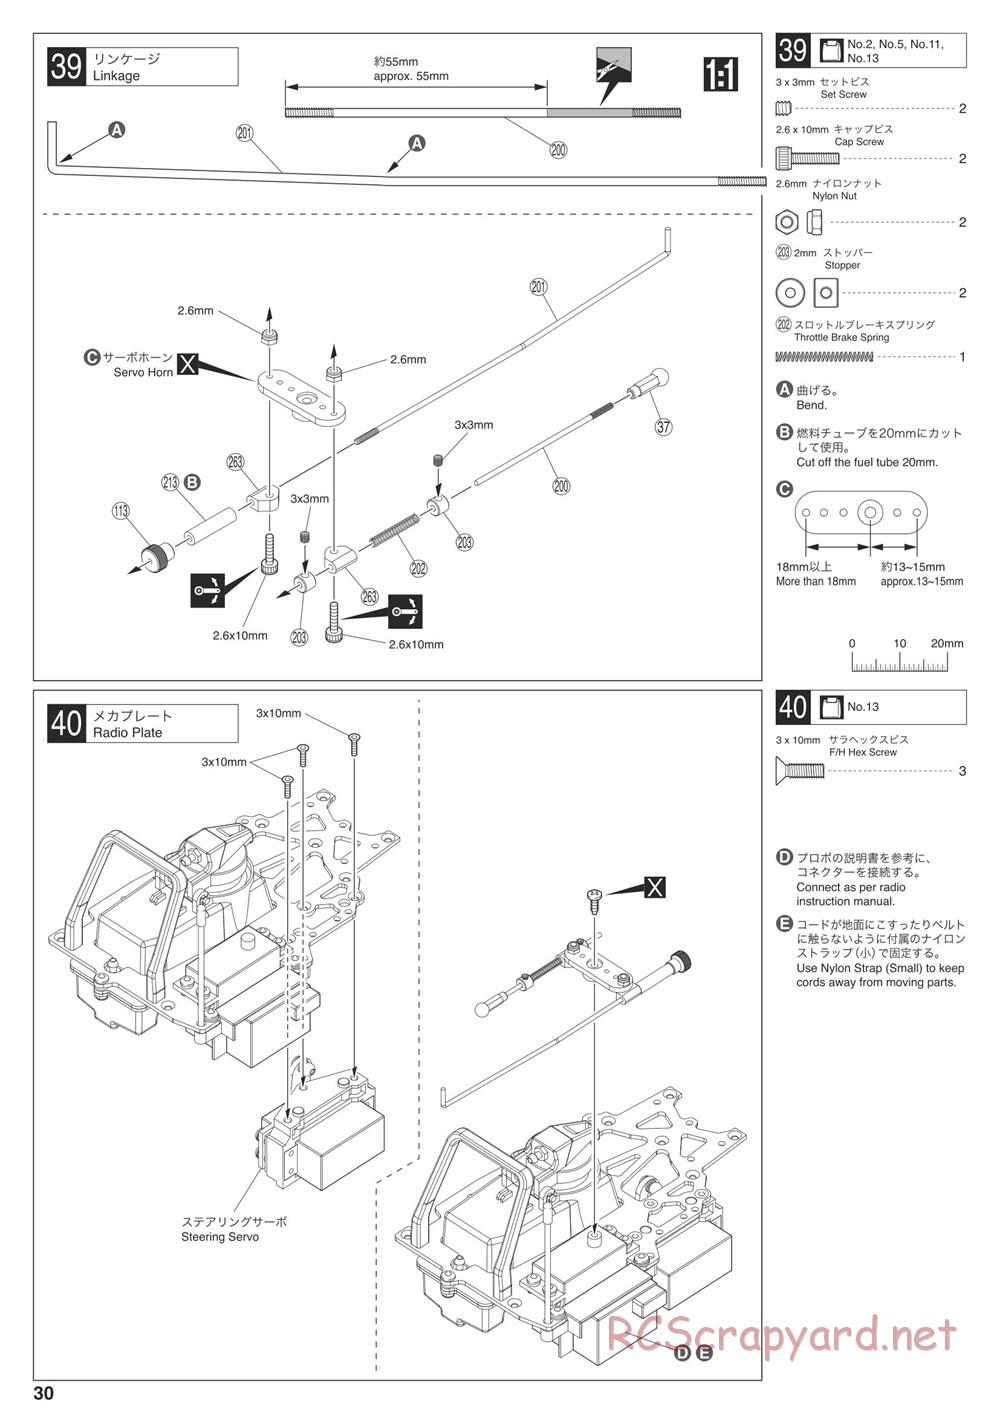 Kyosho - V-One RRR Shimo - Manual - Page 30